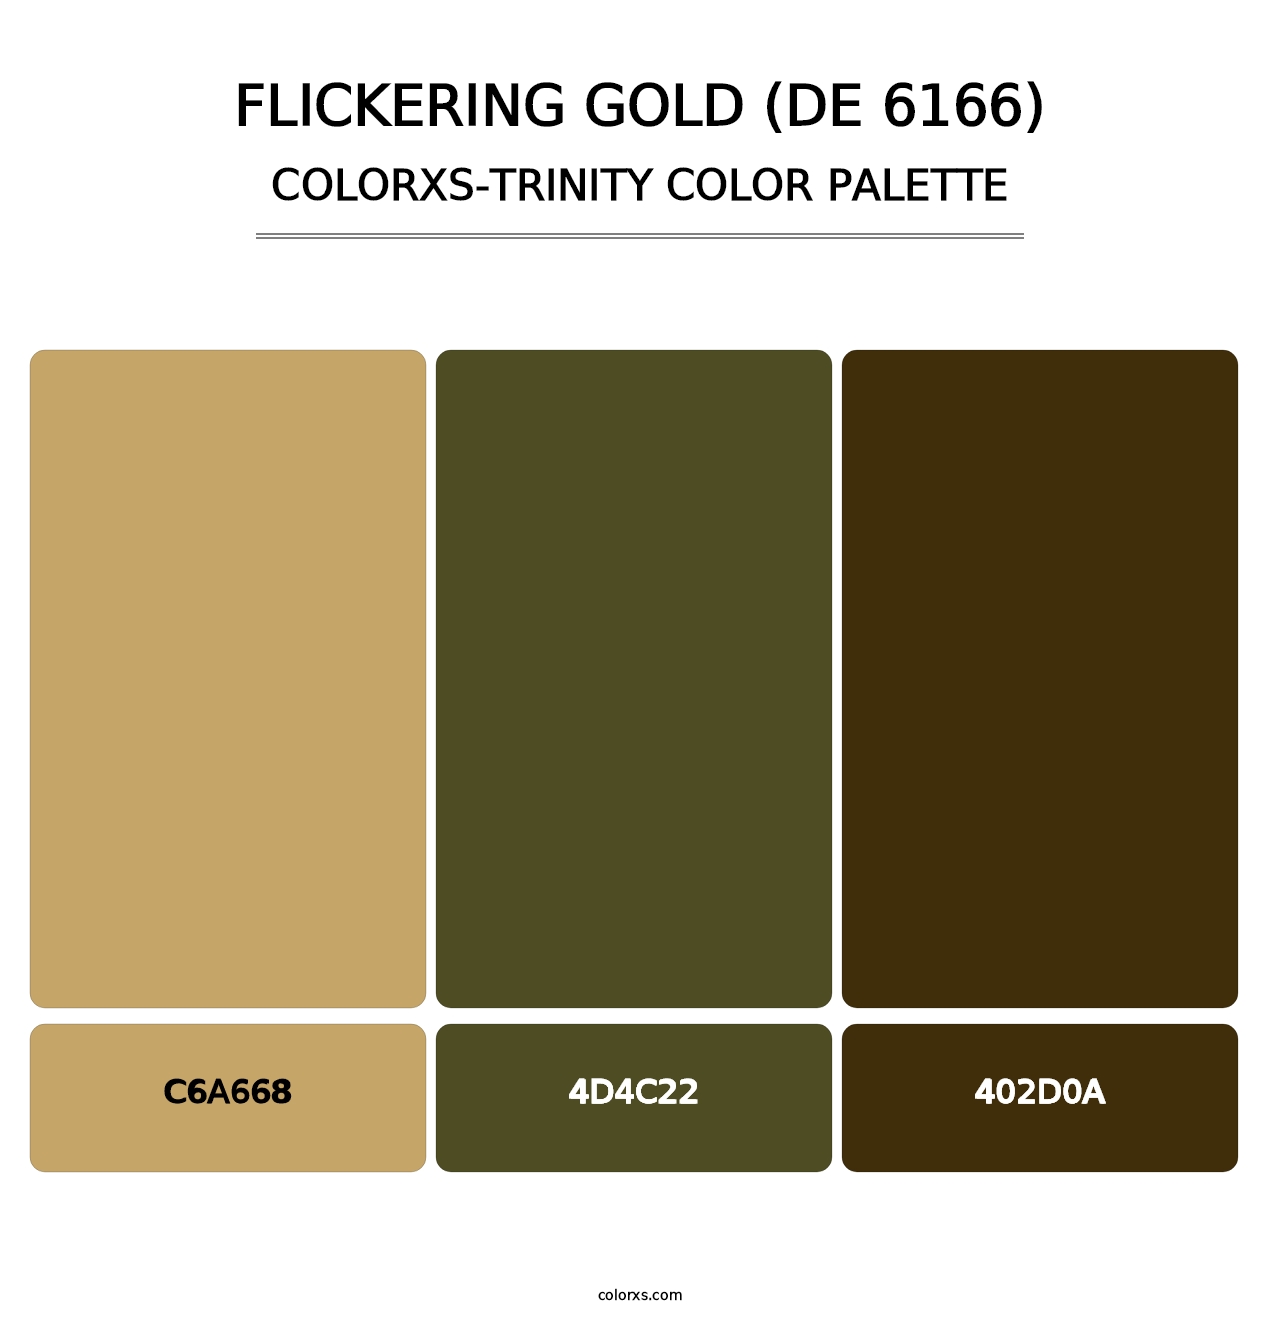 Flickering Gold (DE 6166) - Colorxs Trinity Palette